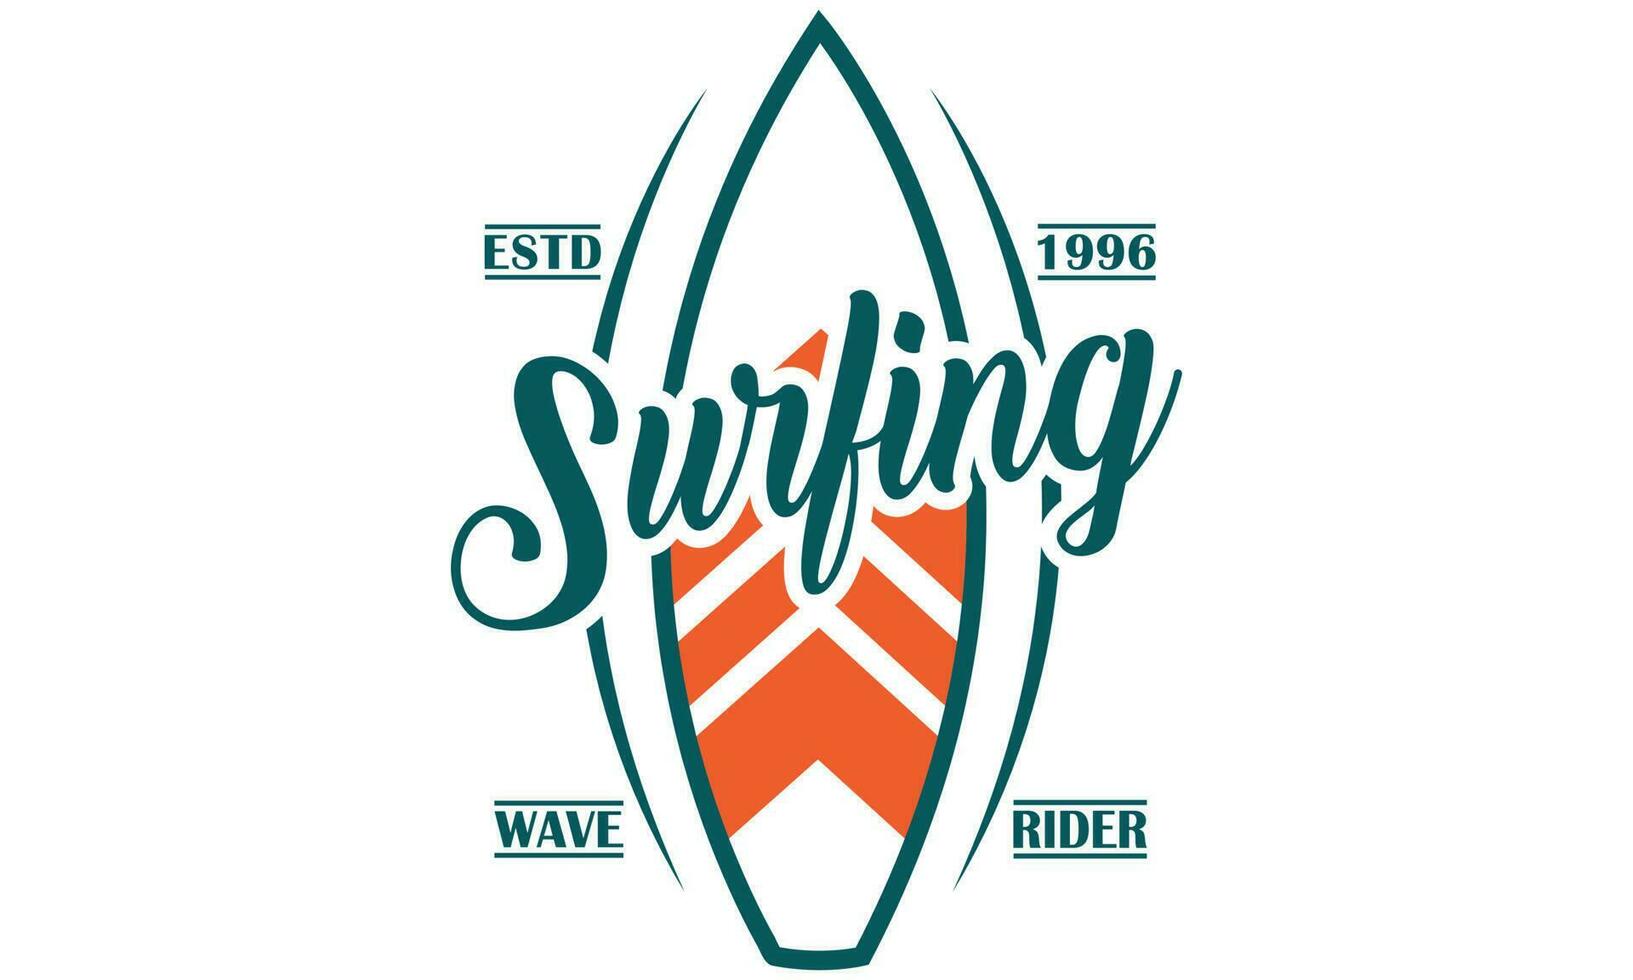 Surfing T-shirt Design Vector Illustration. Surfing T-shirt Design. Typography, T-shirt Graphics, Print, Poster. T-shirt Stock Vector Illustration. Surfing Related Apparel Design.